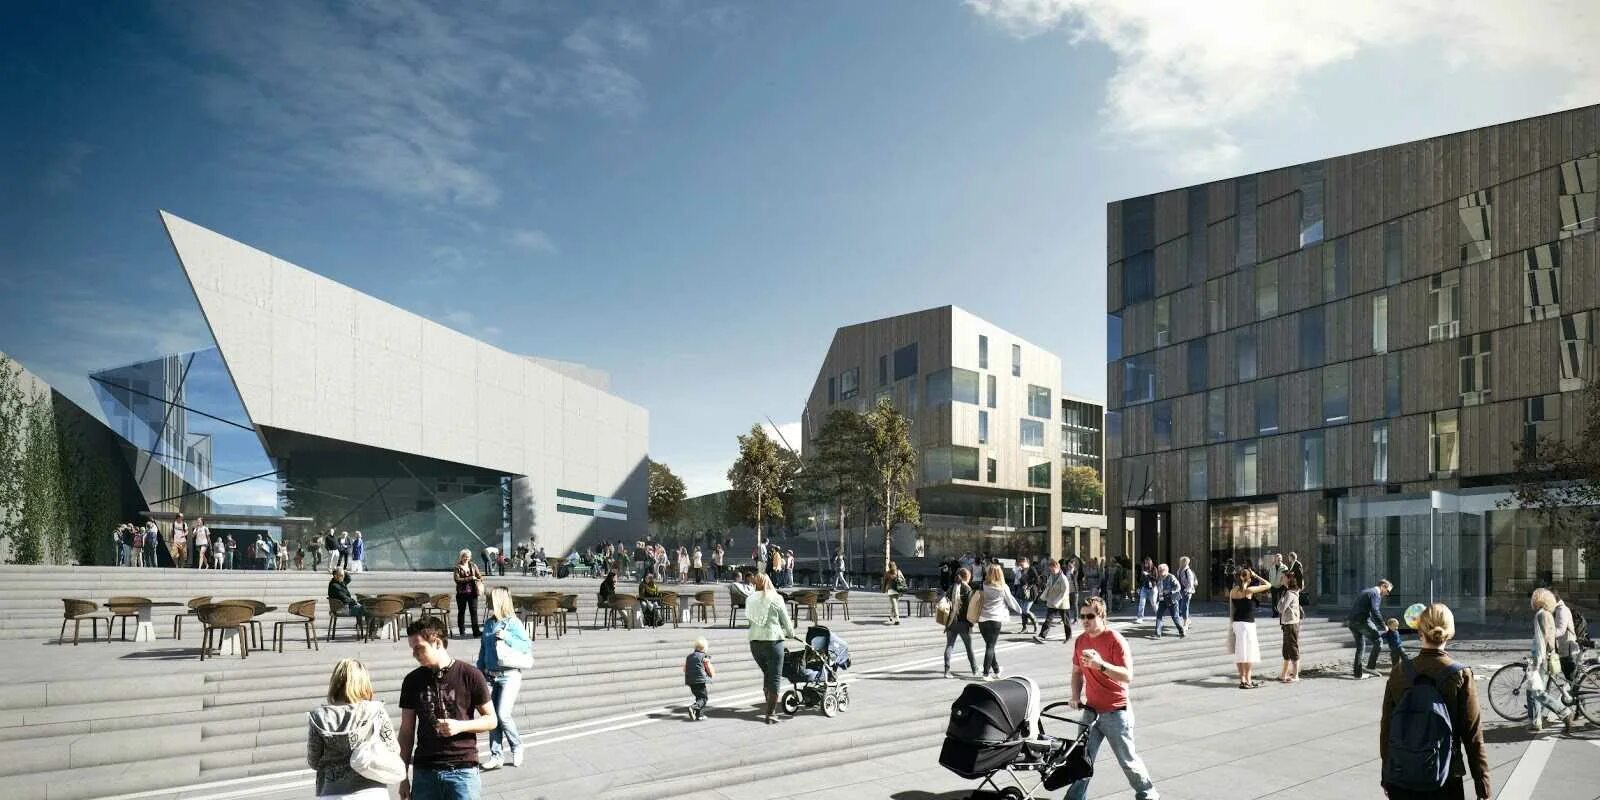 Public area. Общественный центр Копенгаген Nord Architects. Bjørvika – новый общественный центр города. Modern public area.